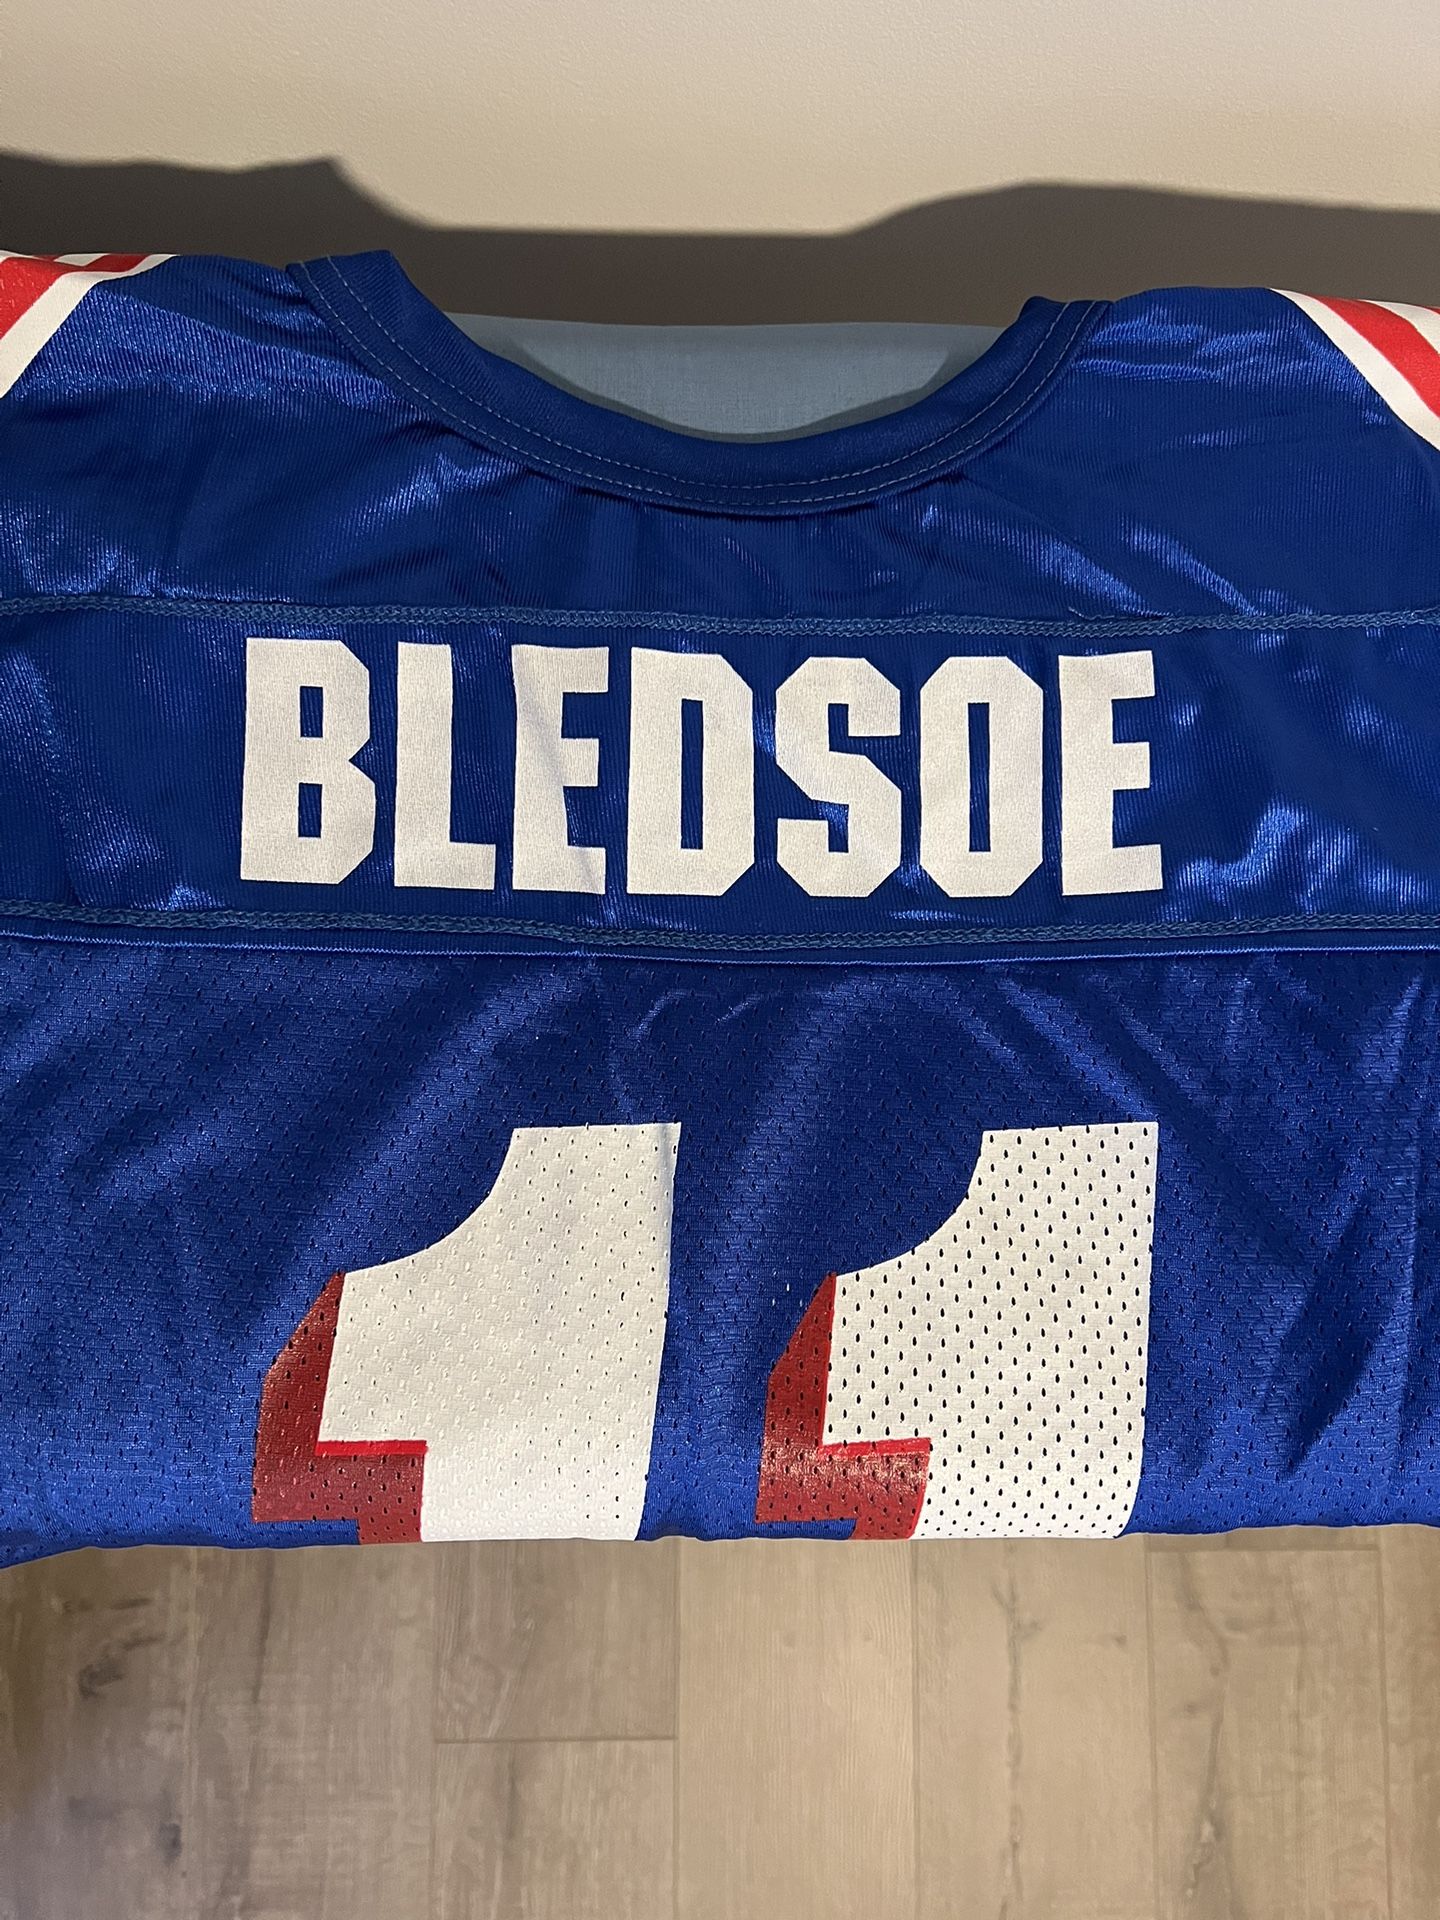 Drew Bledsoe Patriots Jersey